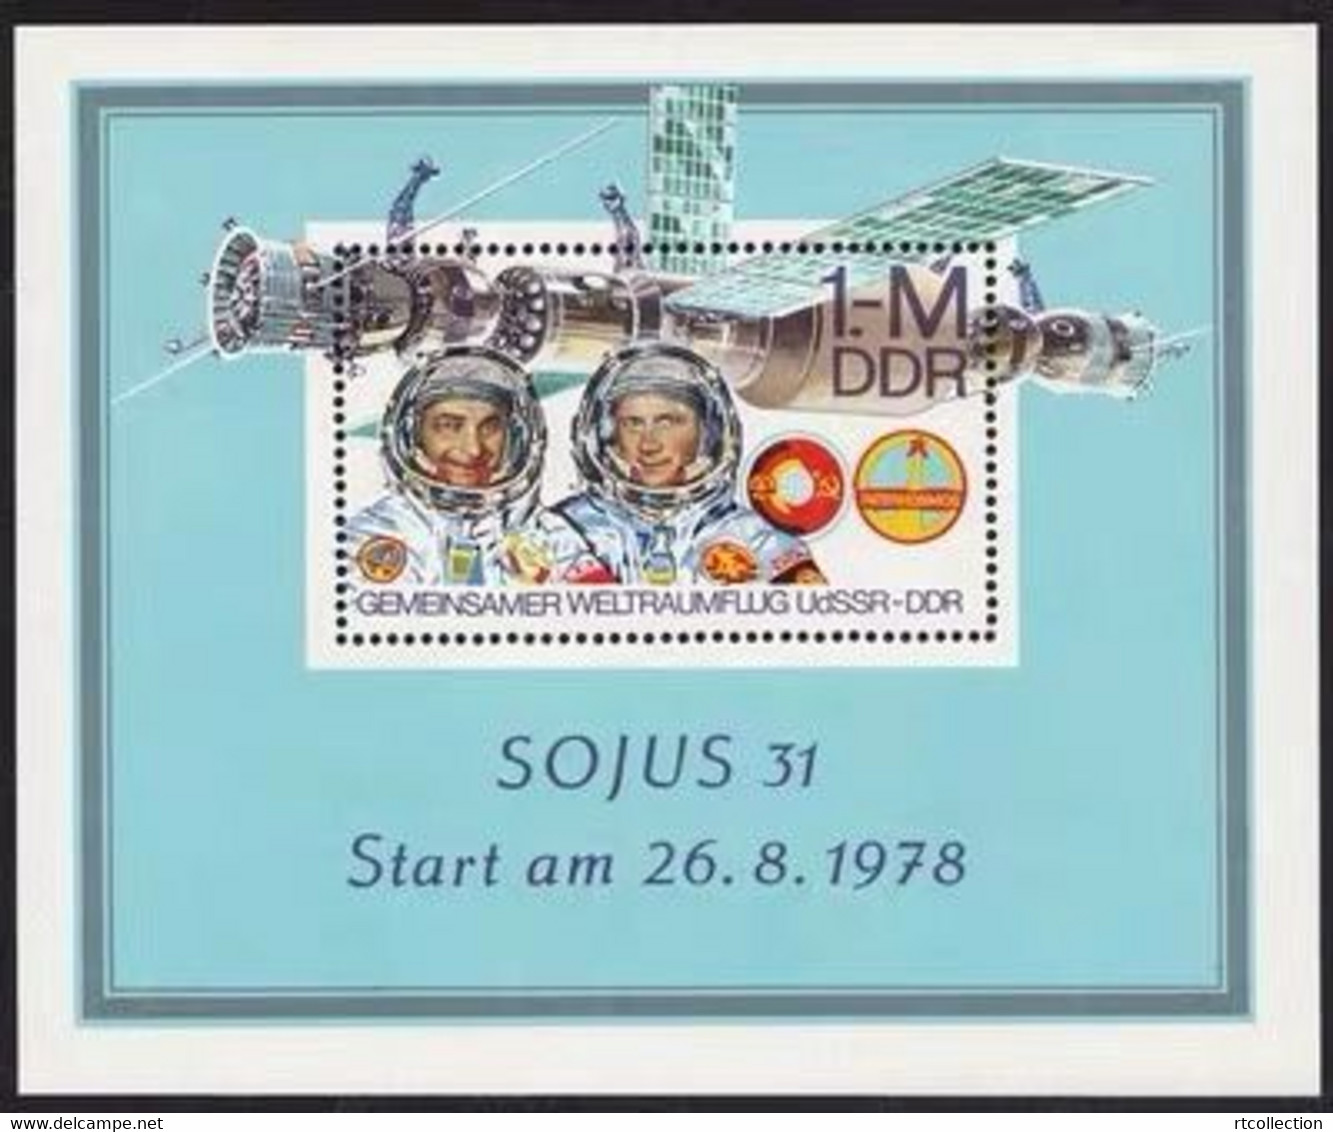 Germany 1978 DDR Space Travel Joint Flight Soviet USSR GDR Sciences People Soyuz 31 S/S Stamp MNH - Sammlungen